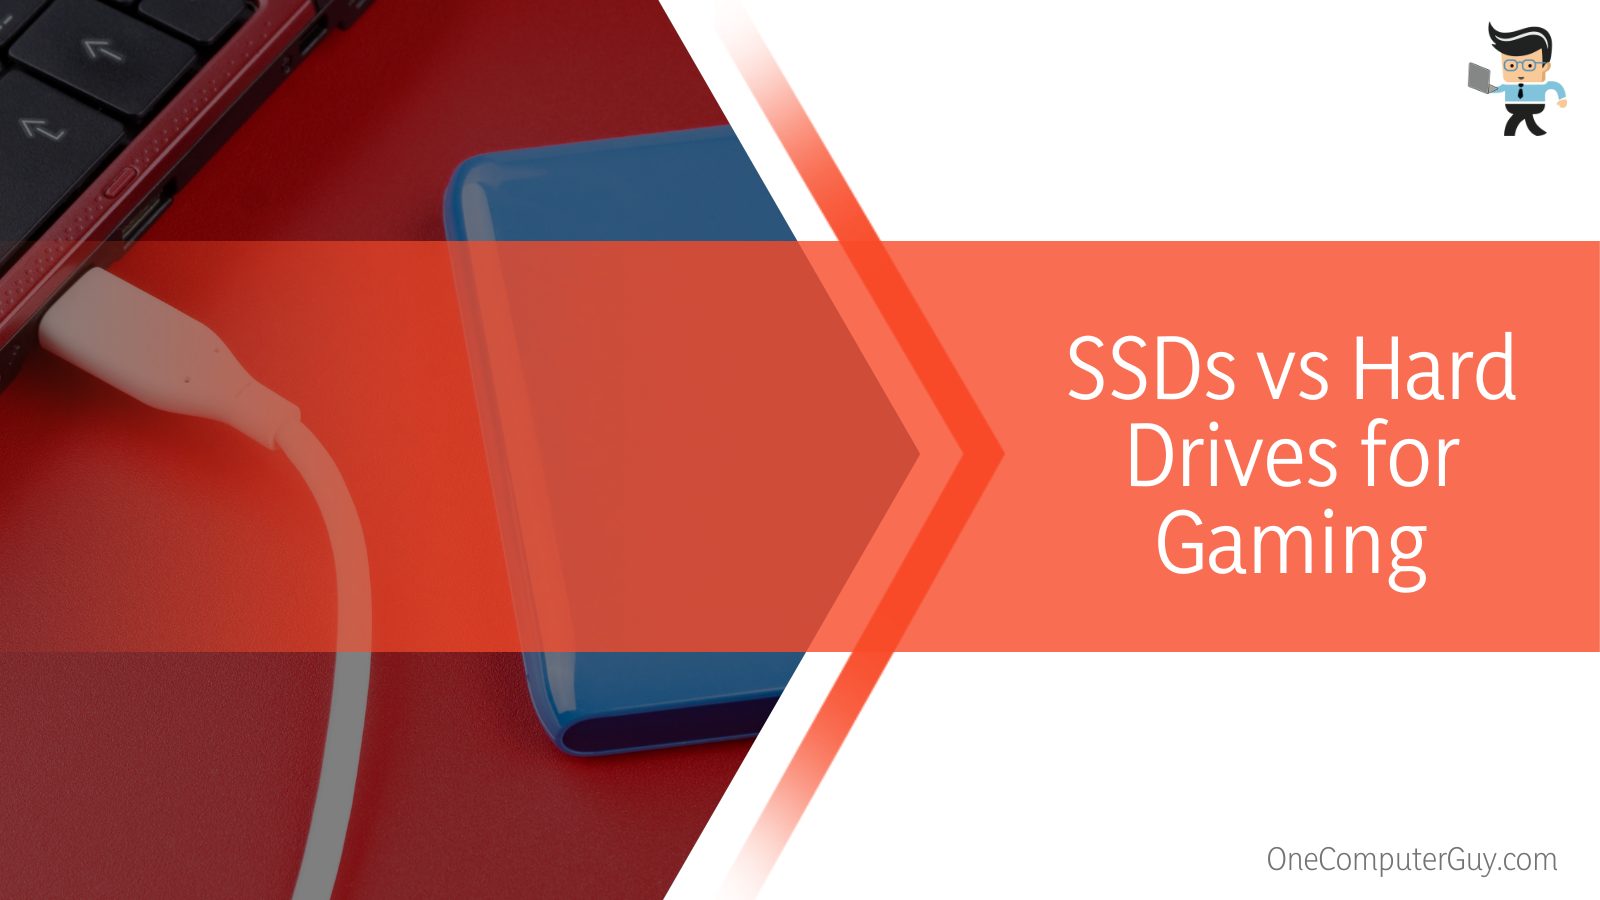 SSDs vs Hard Drives for Gaming